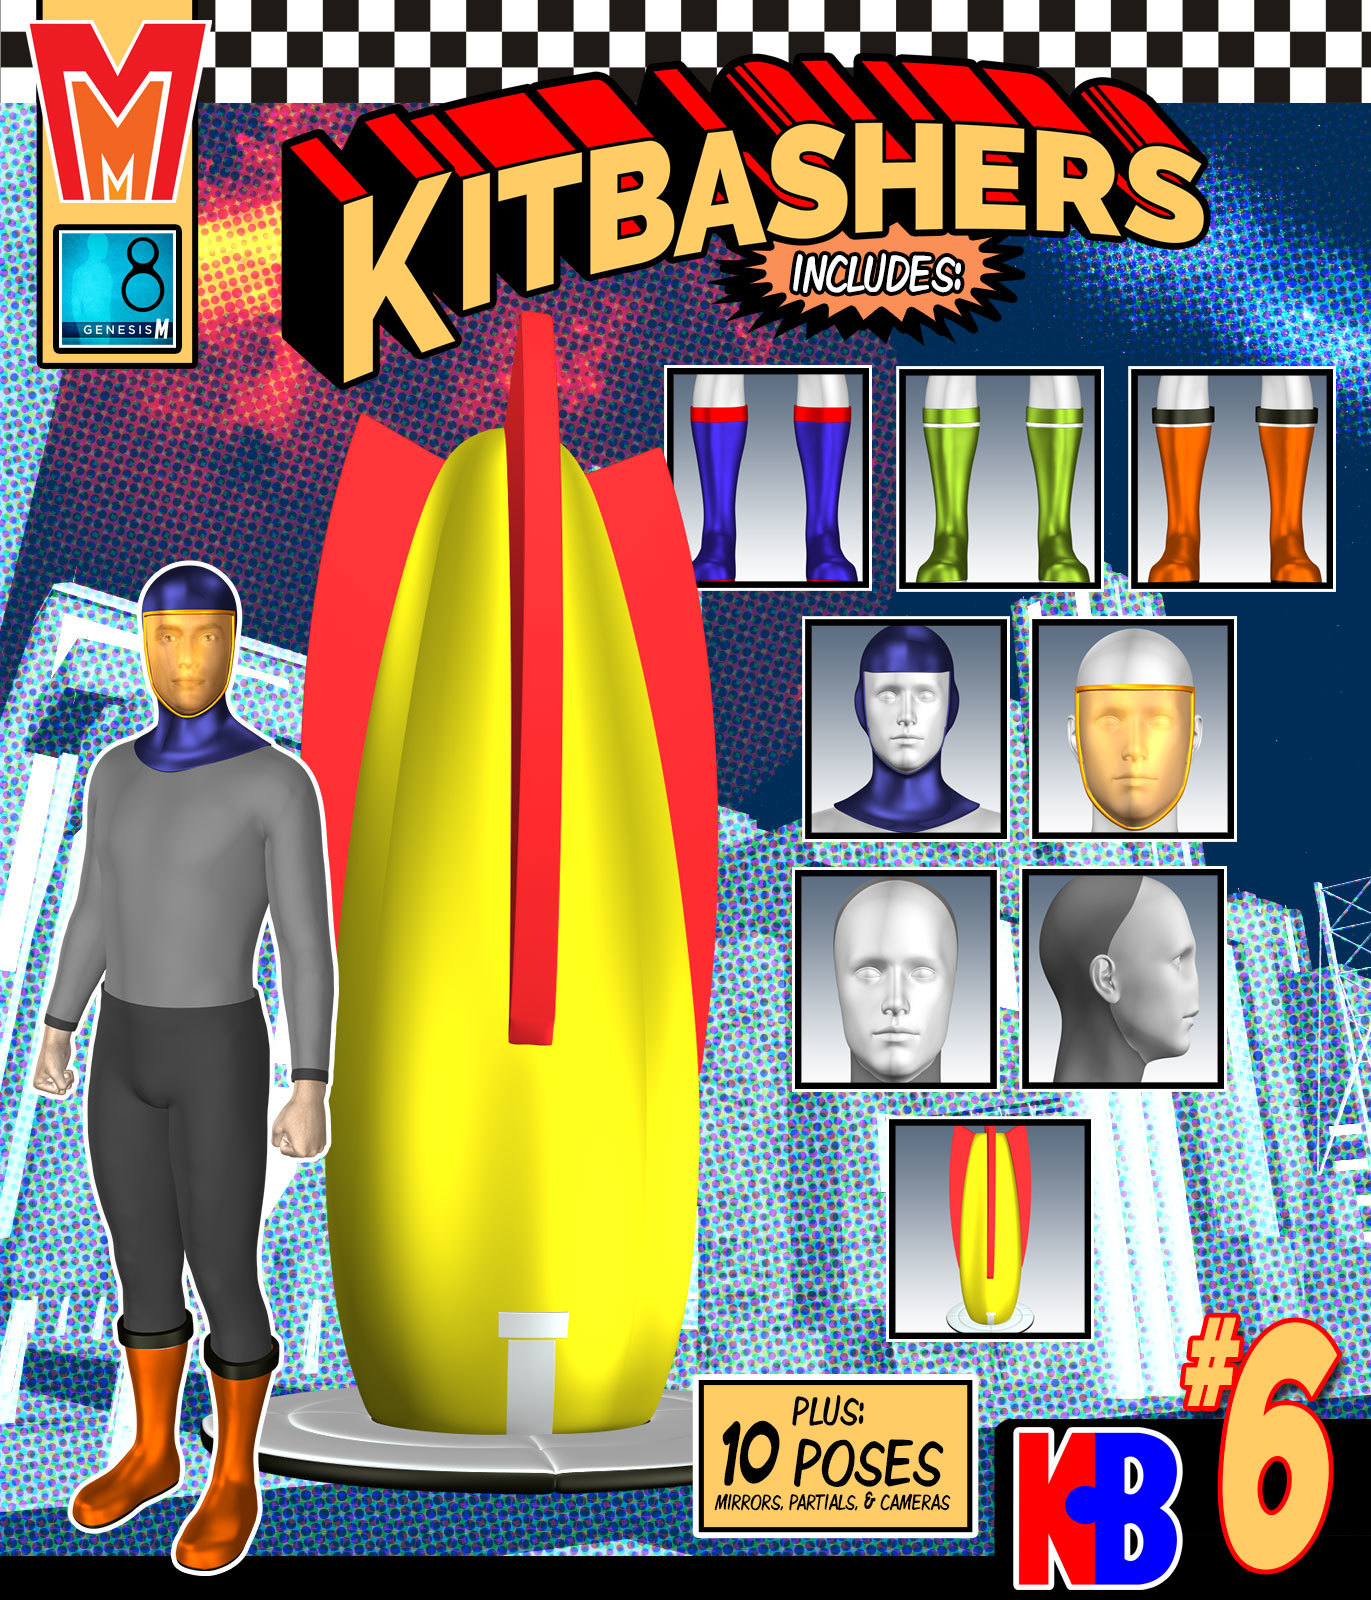 Kitbashers 006 MMG8M by: MightyMite, 3D Models by Daz 3D